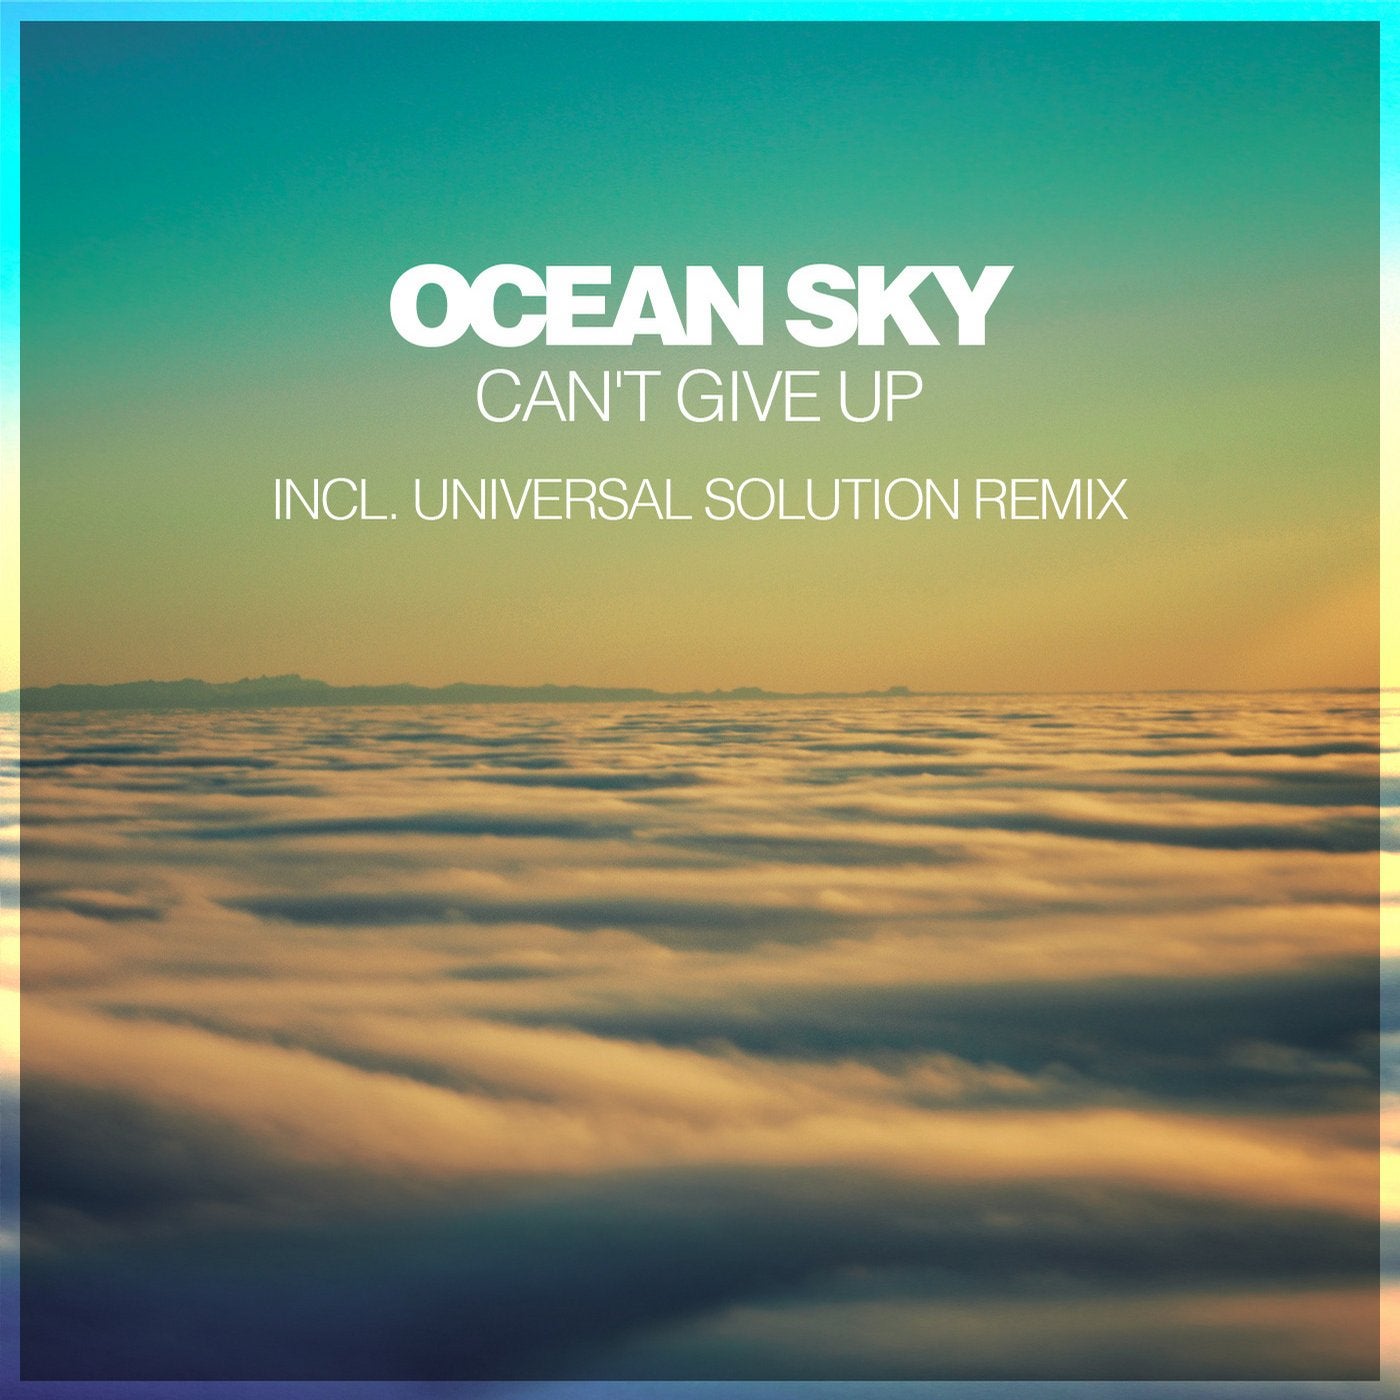 We can sky. Universal solution. Man Ocean Sky. Океан небо песня. Music Producer Ocean.